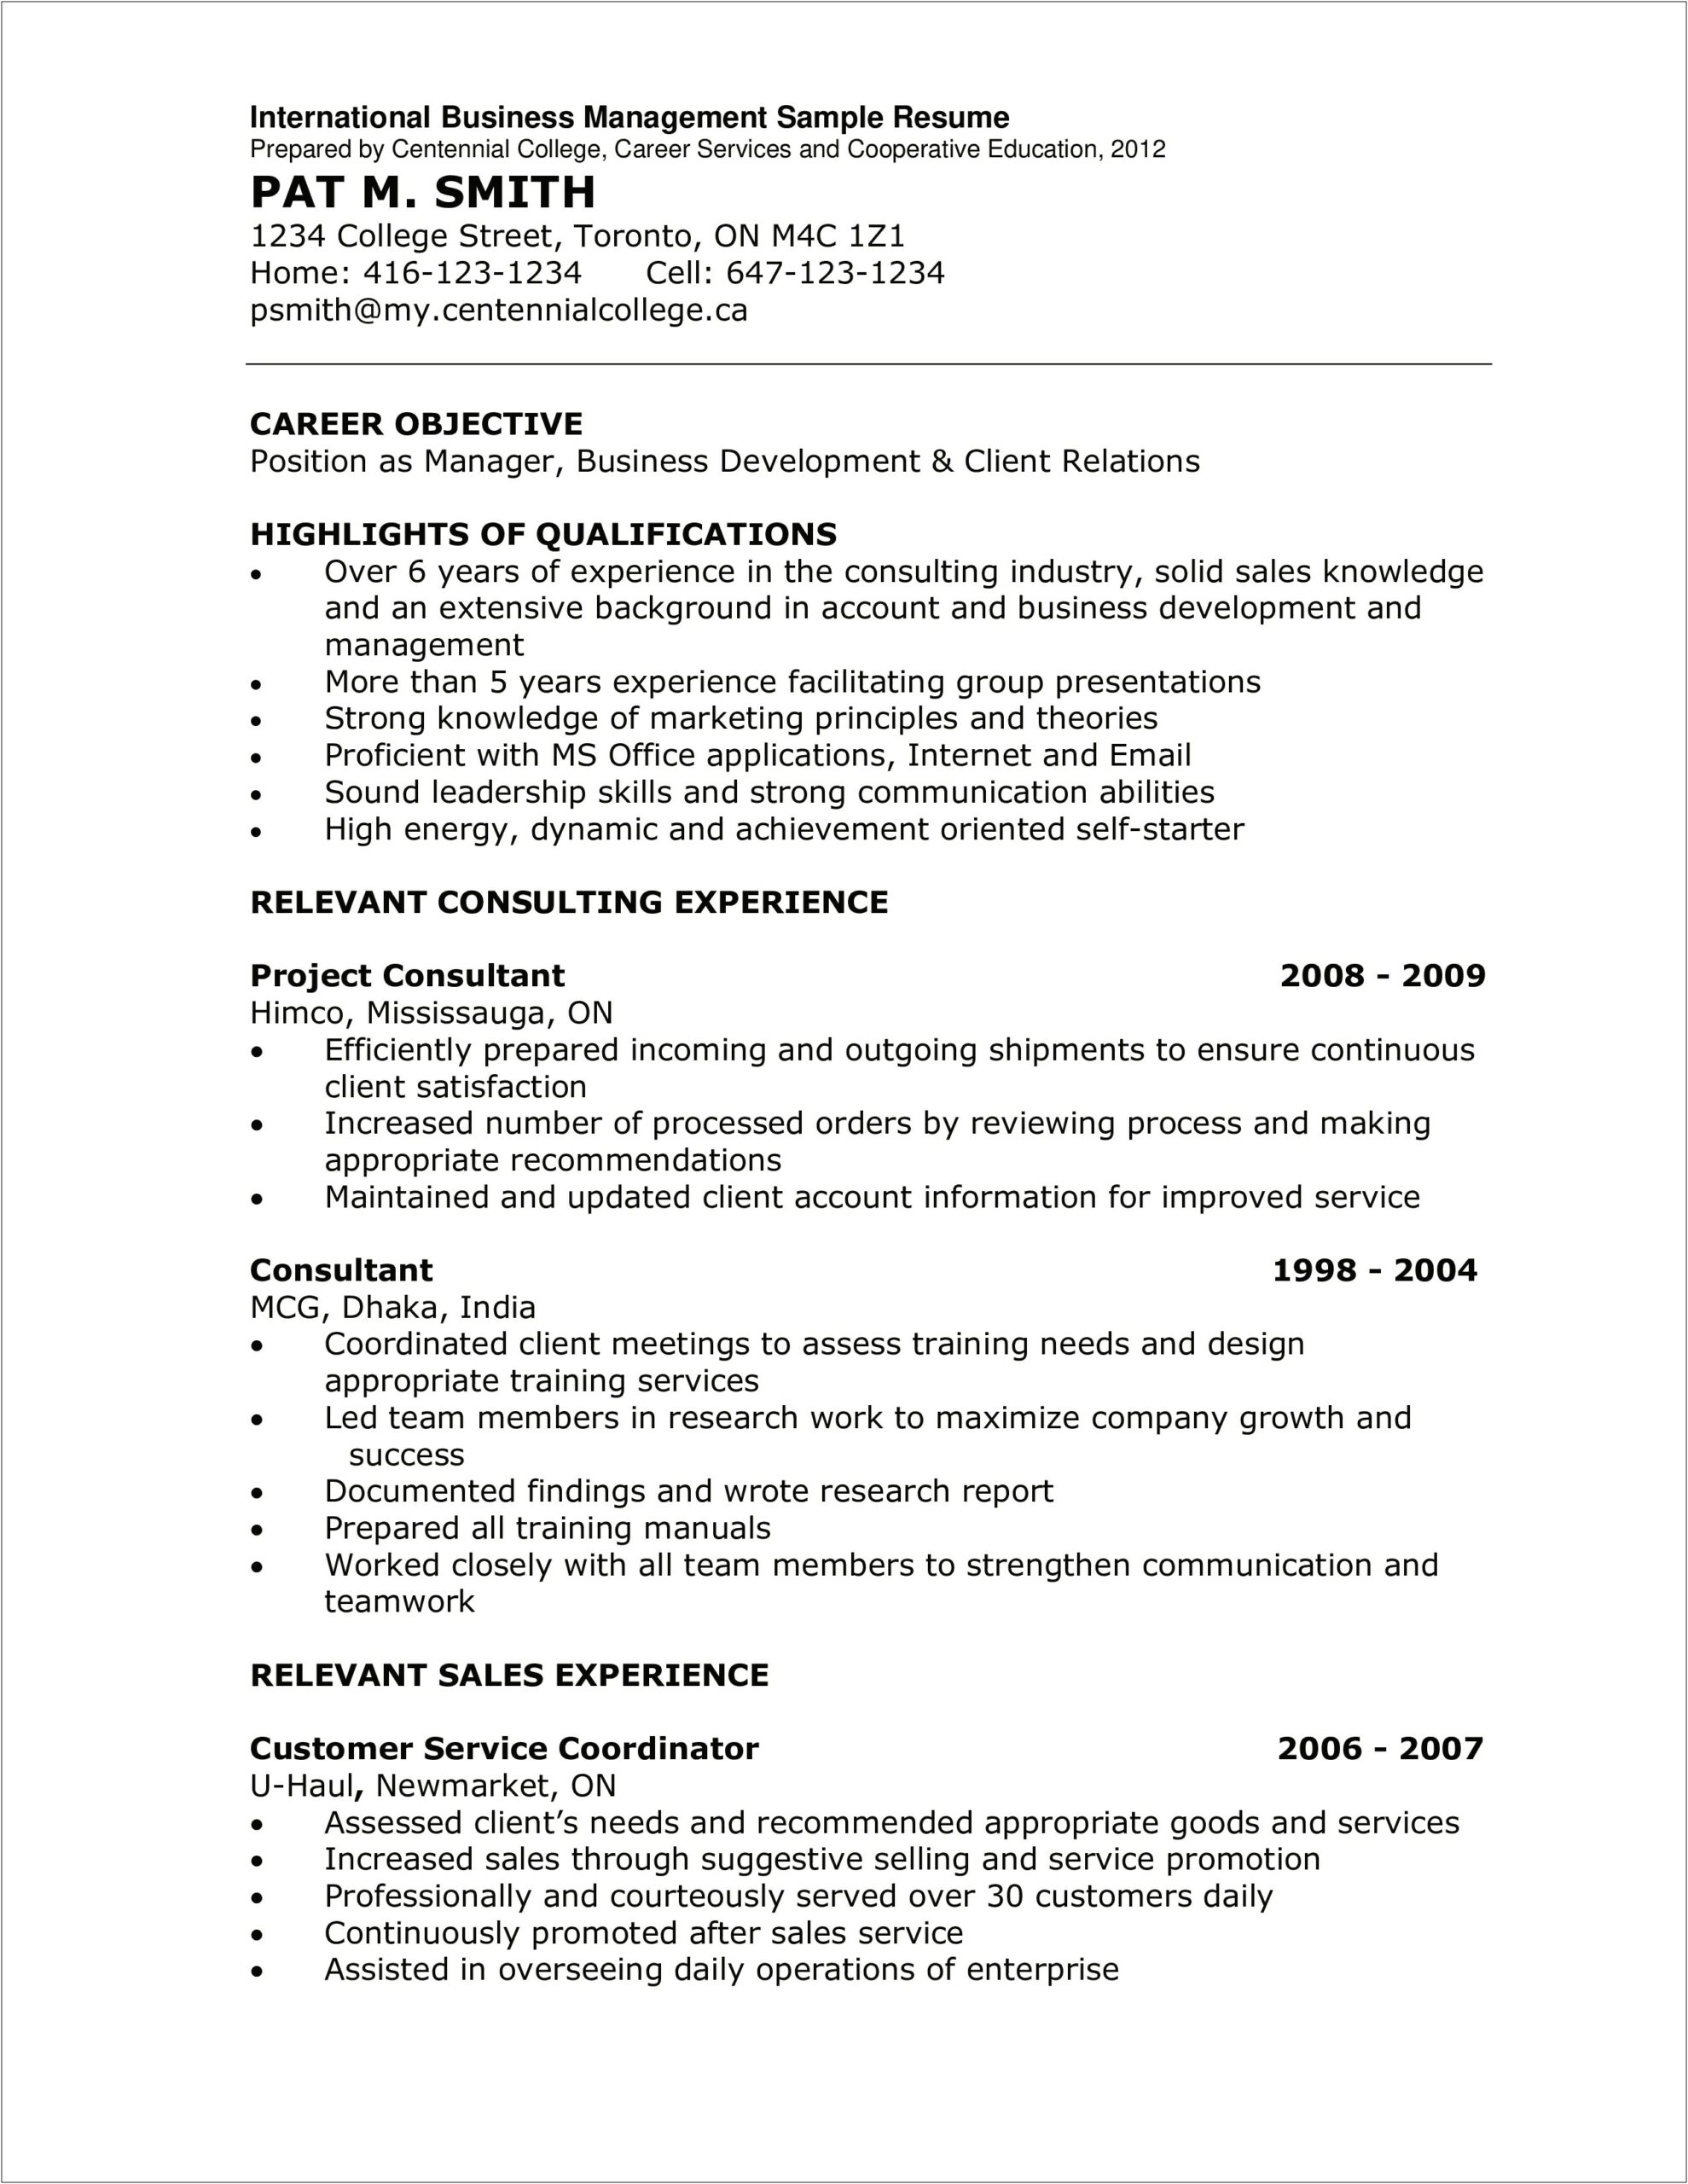 Residential Service Coordinator Job Description For Resume